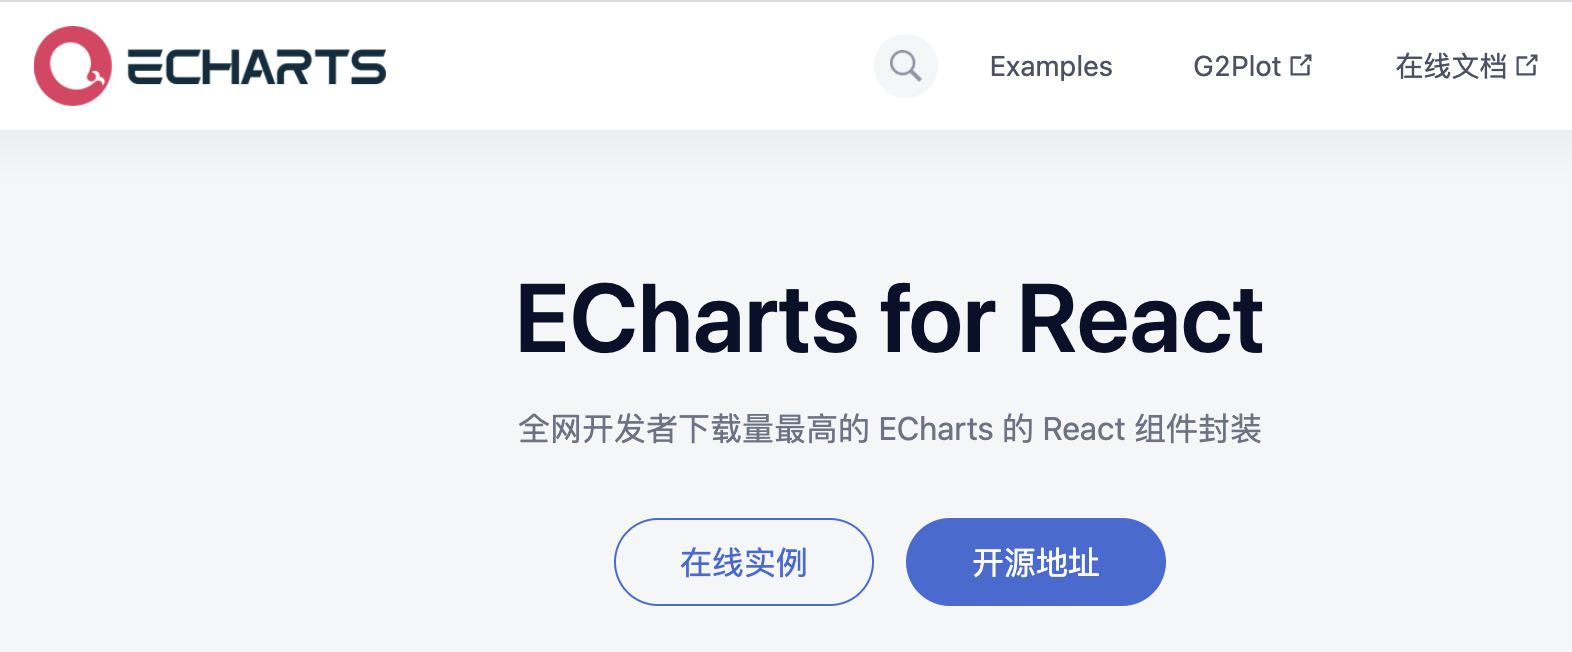 echarts资源 - 图1